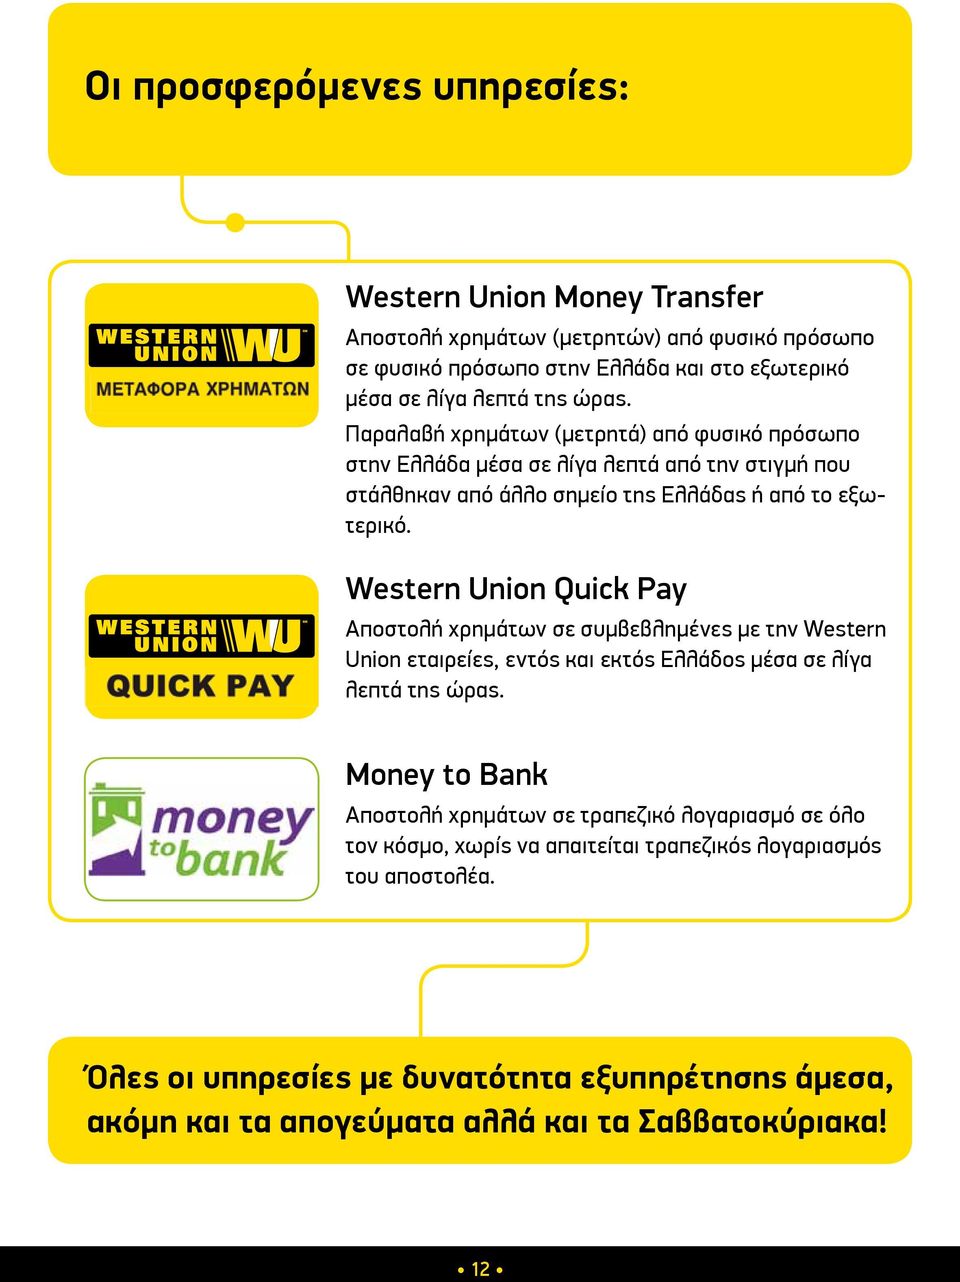 Western Union Quick Pay Αποστολή χρημάτων σε συμβεβλημένες με την Western Union εταιρείες, εντός και εκτός Ελλάδος μέσα σε λίγα λεπτά της ώρας.